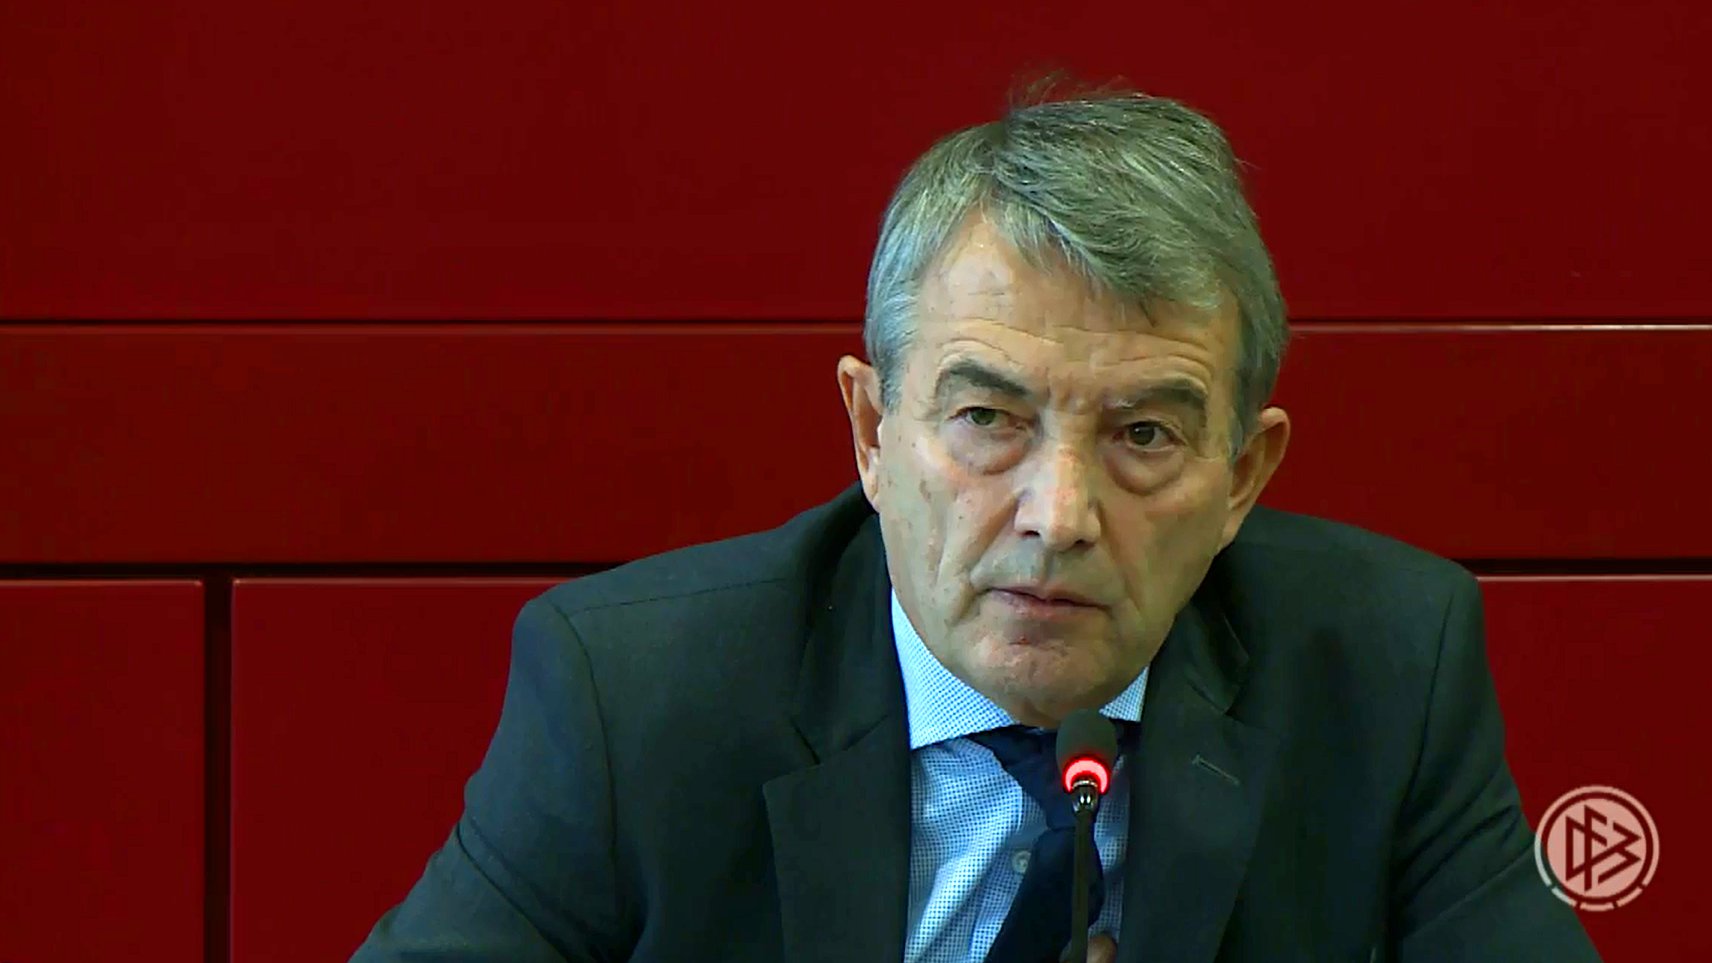 DFB-Pressekonferenz mit Wolfgang Niersbach, 2015.